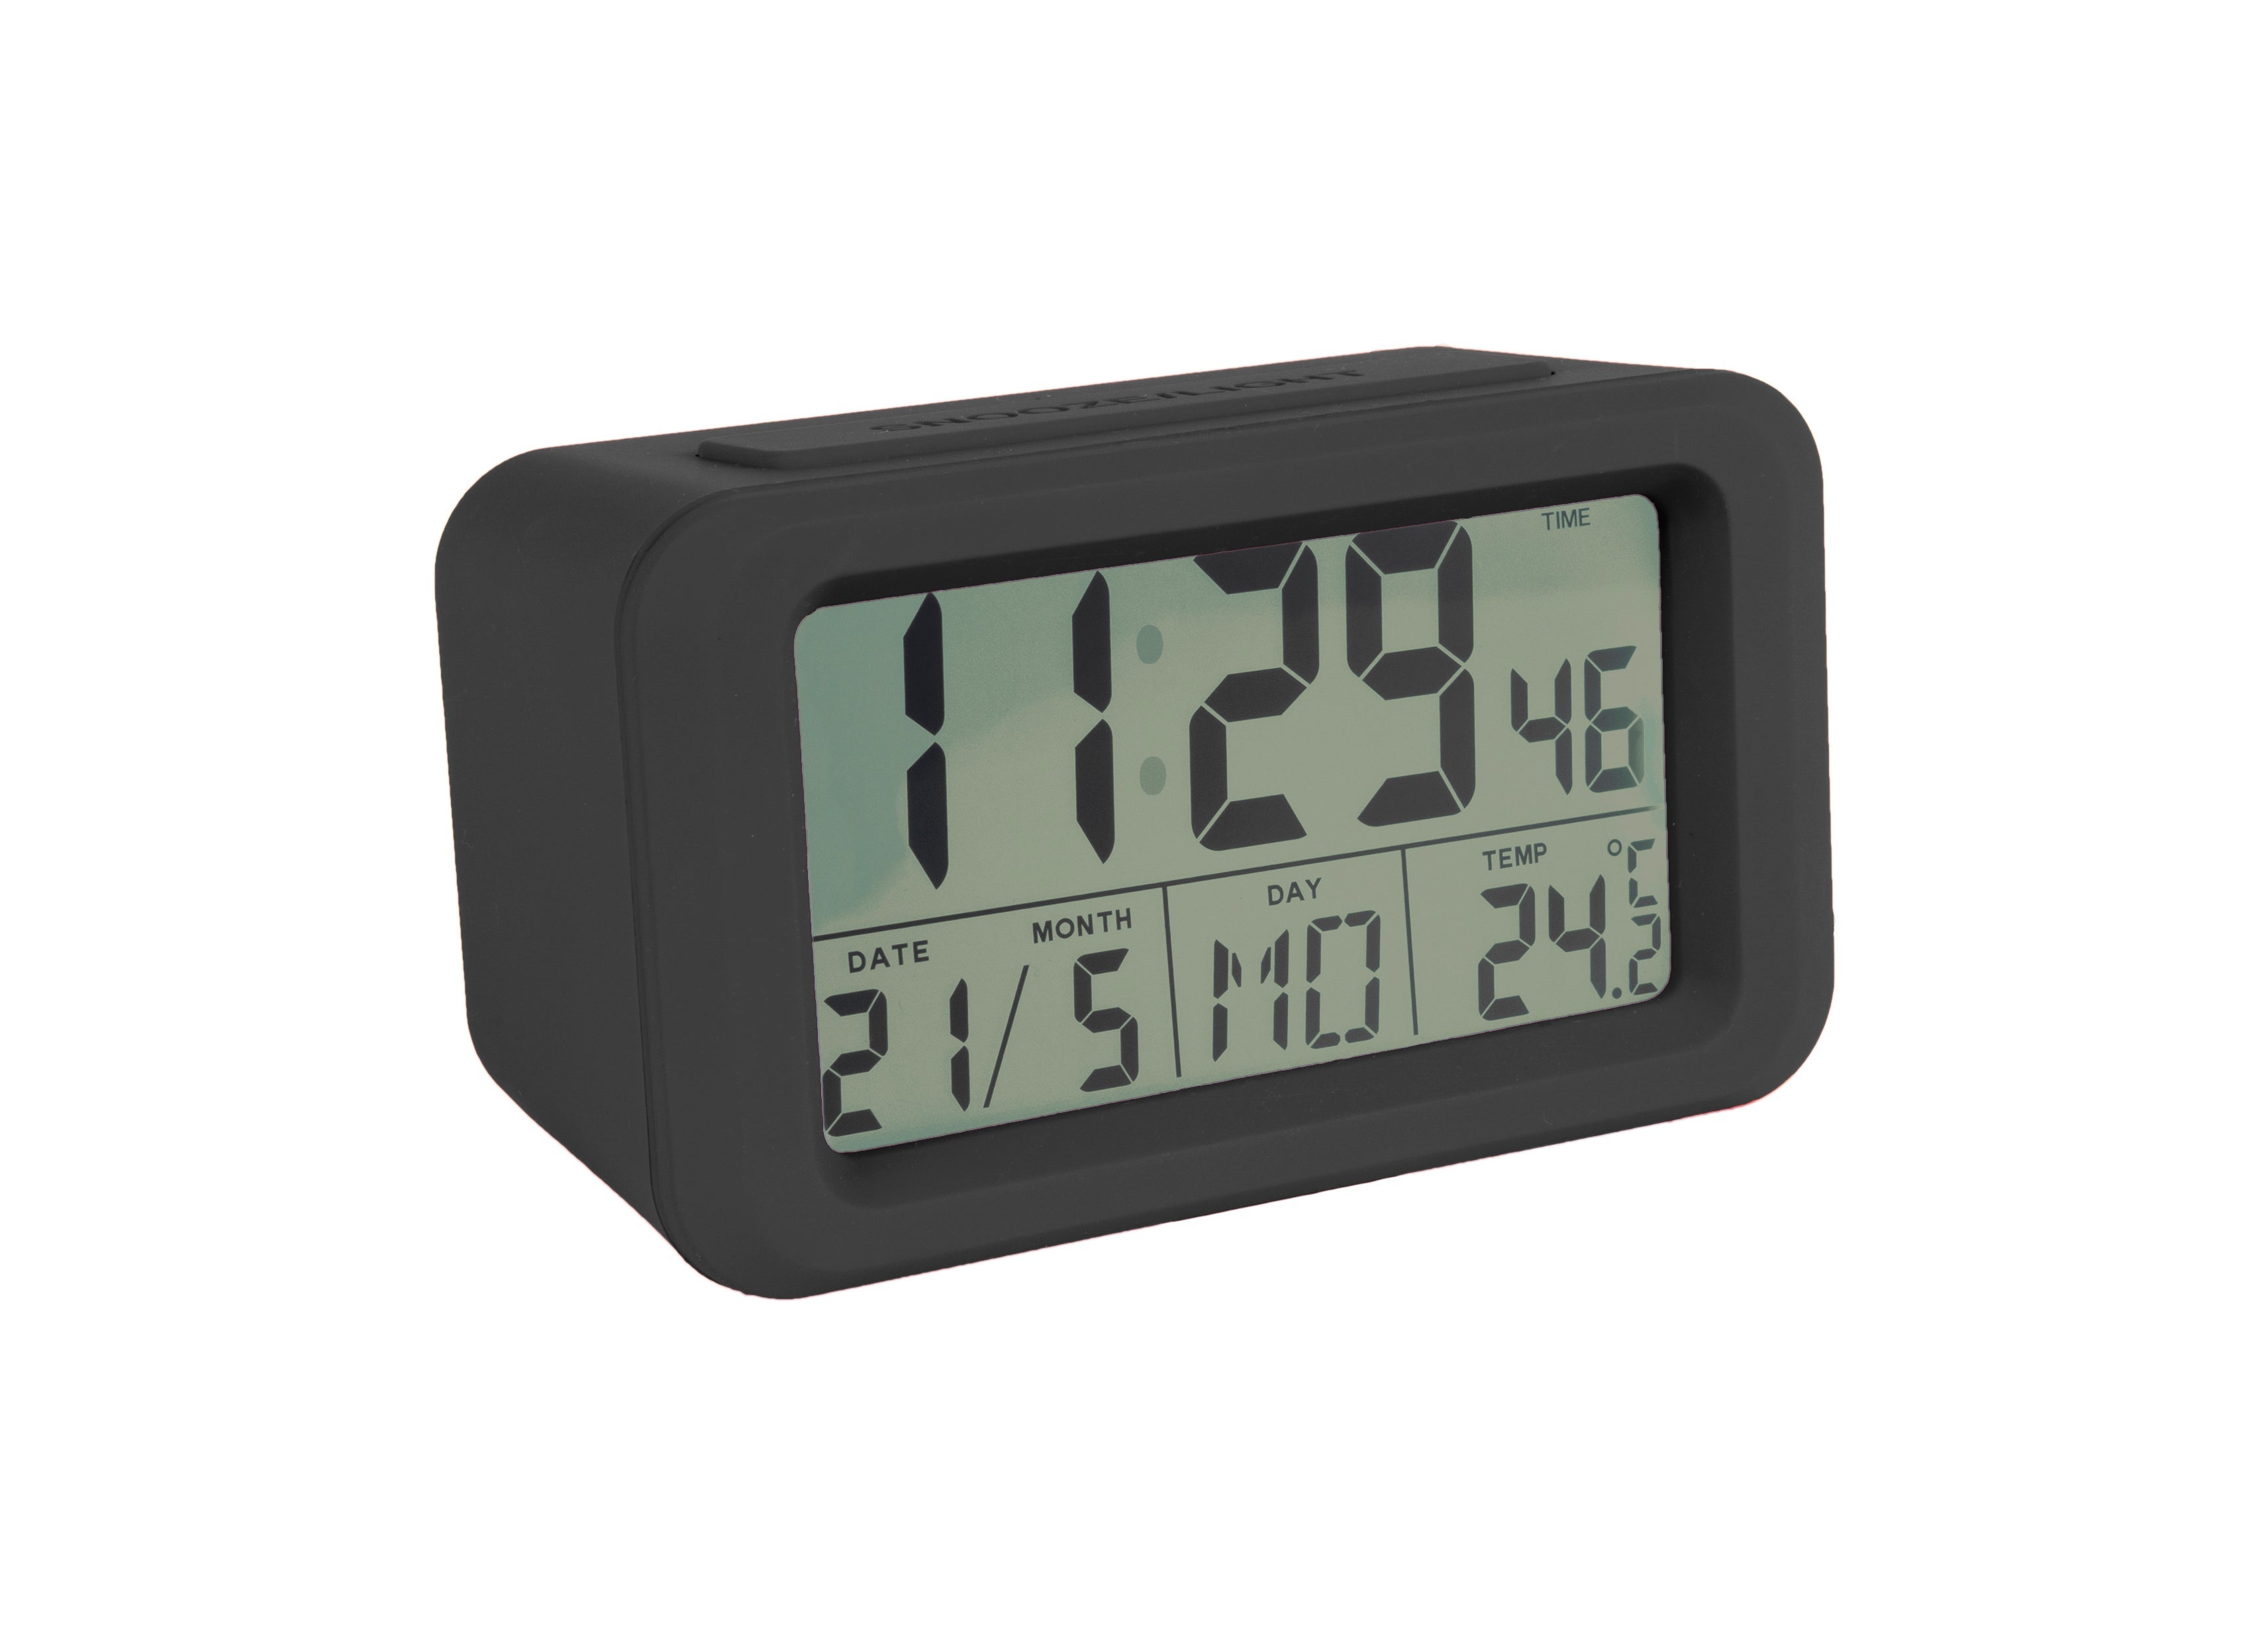 Fisura – Reloj despertador digital blanco LED. Reloj indicador de